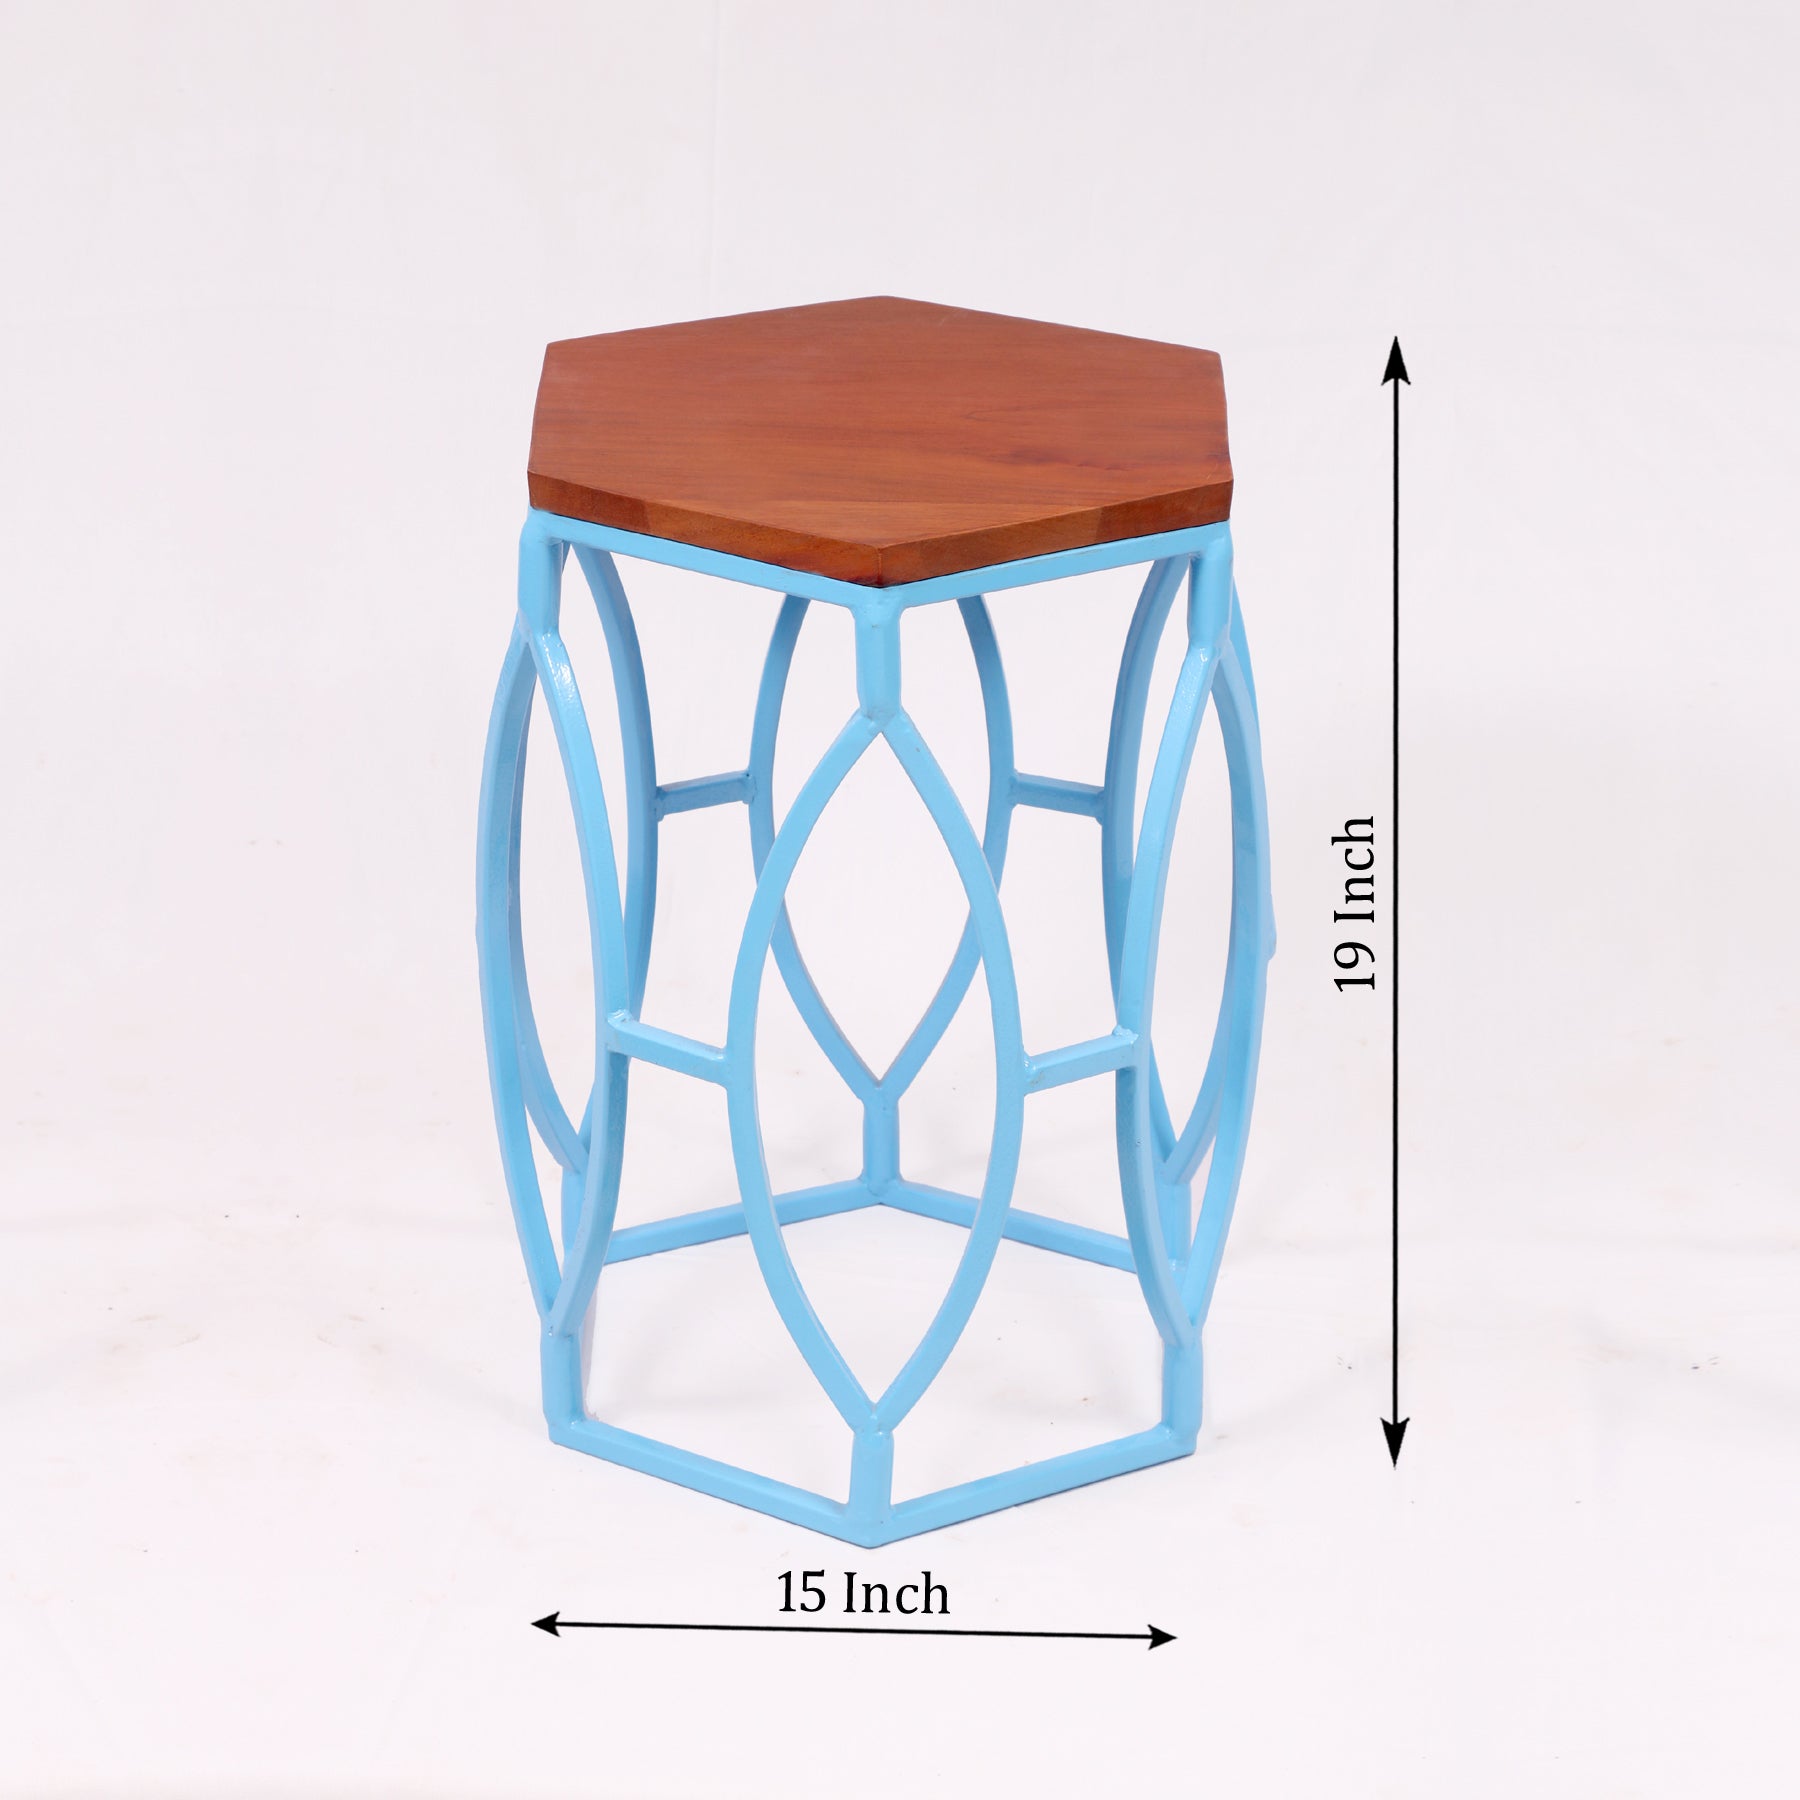 Hexagonal Metallic Coffee Table (Blue) End Table